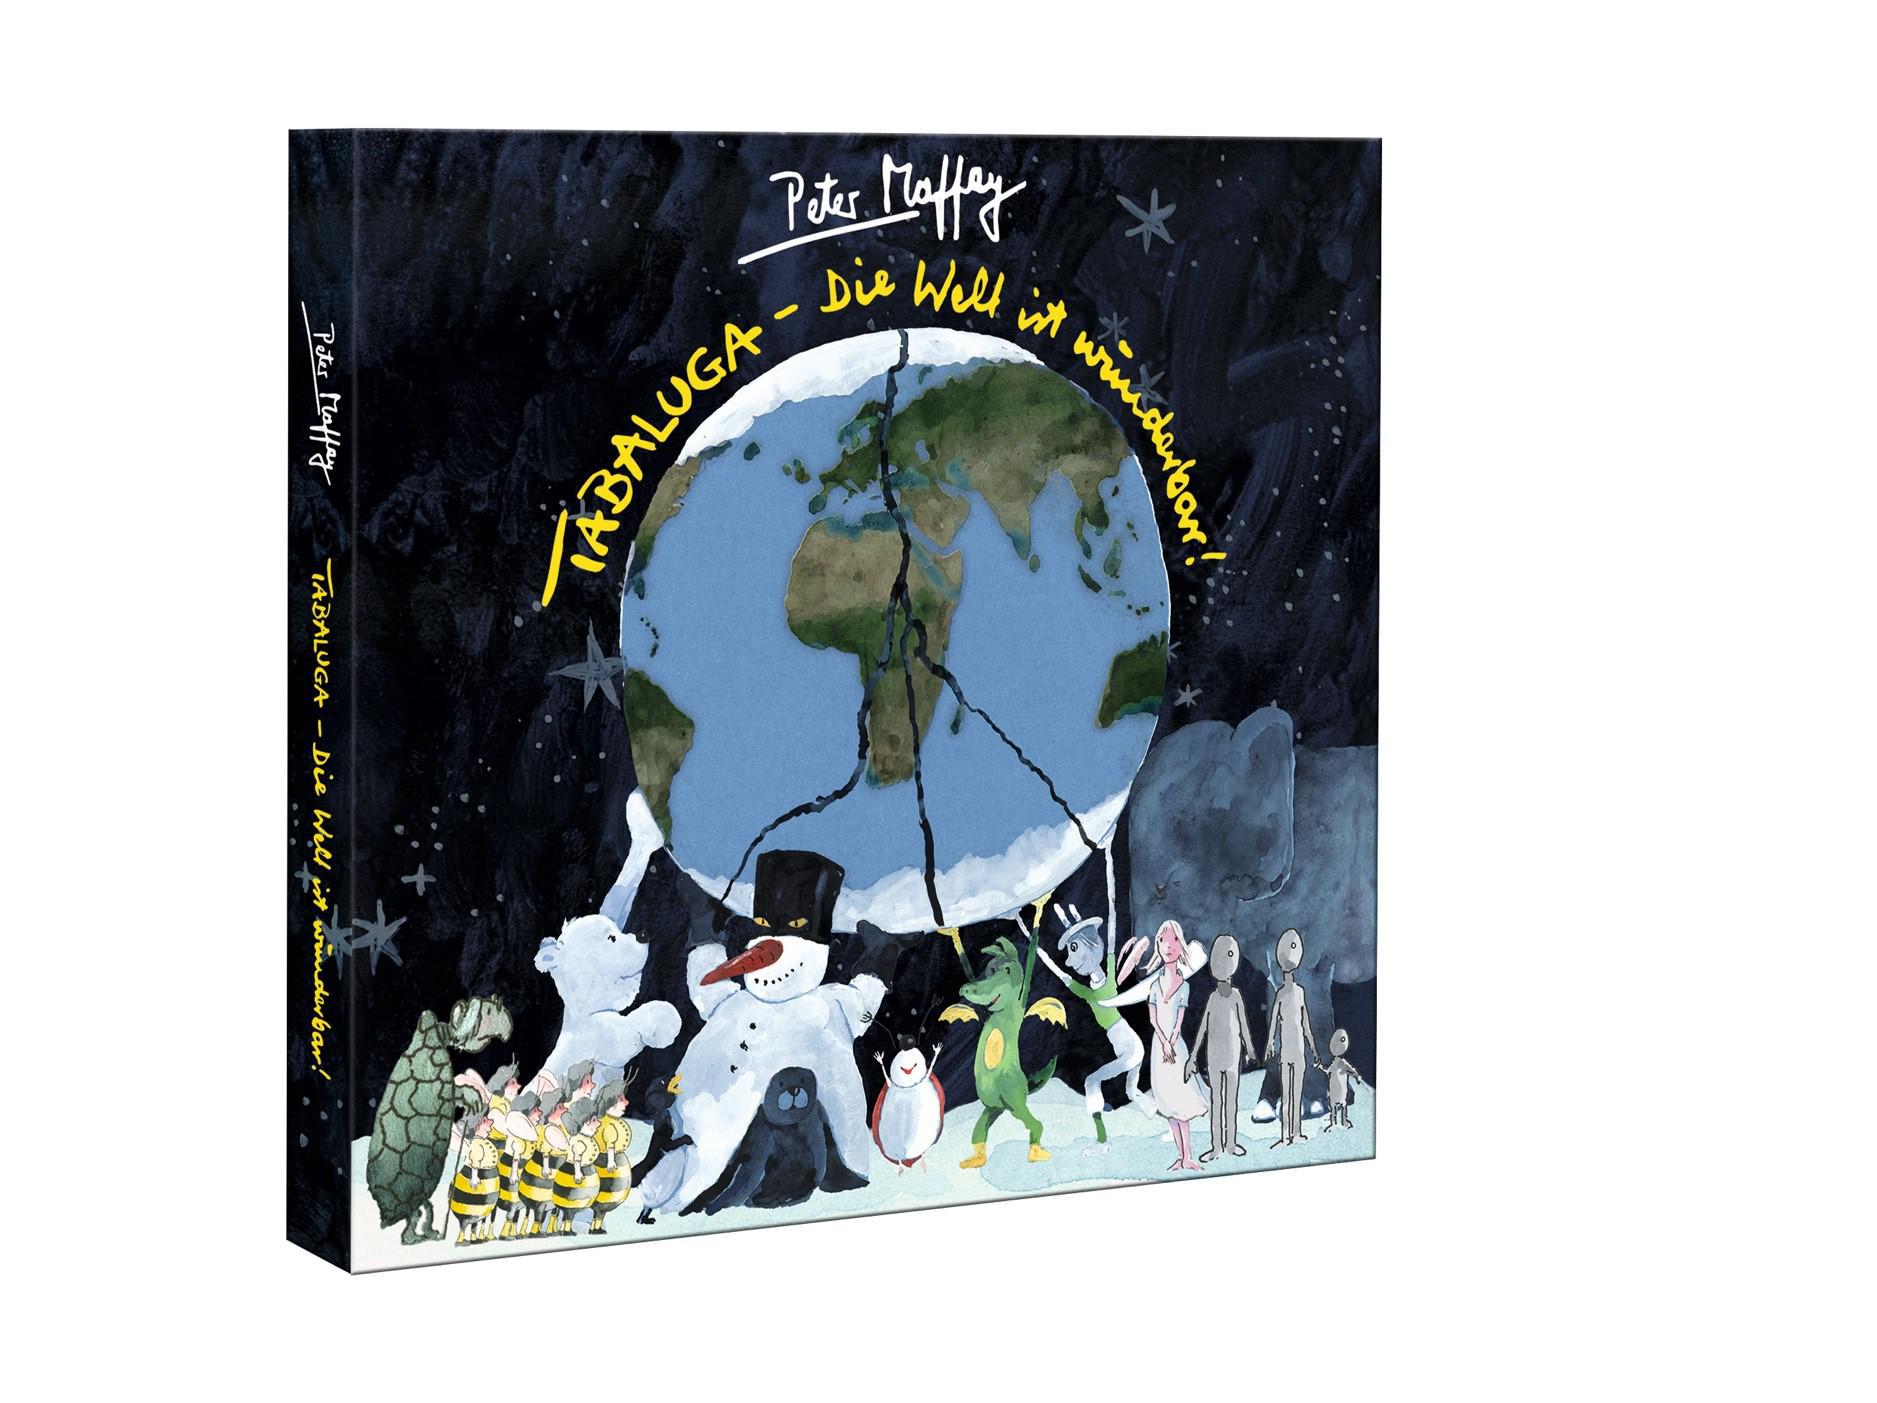 Peter (CD) - Wunderbar Welt Maffay Tabaluga - Die - Ist